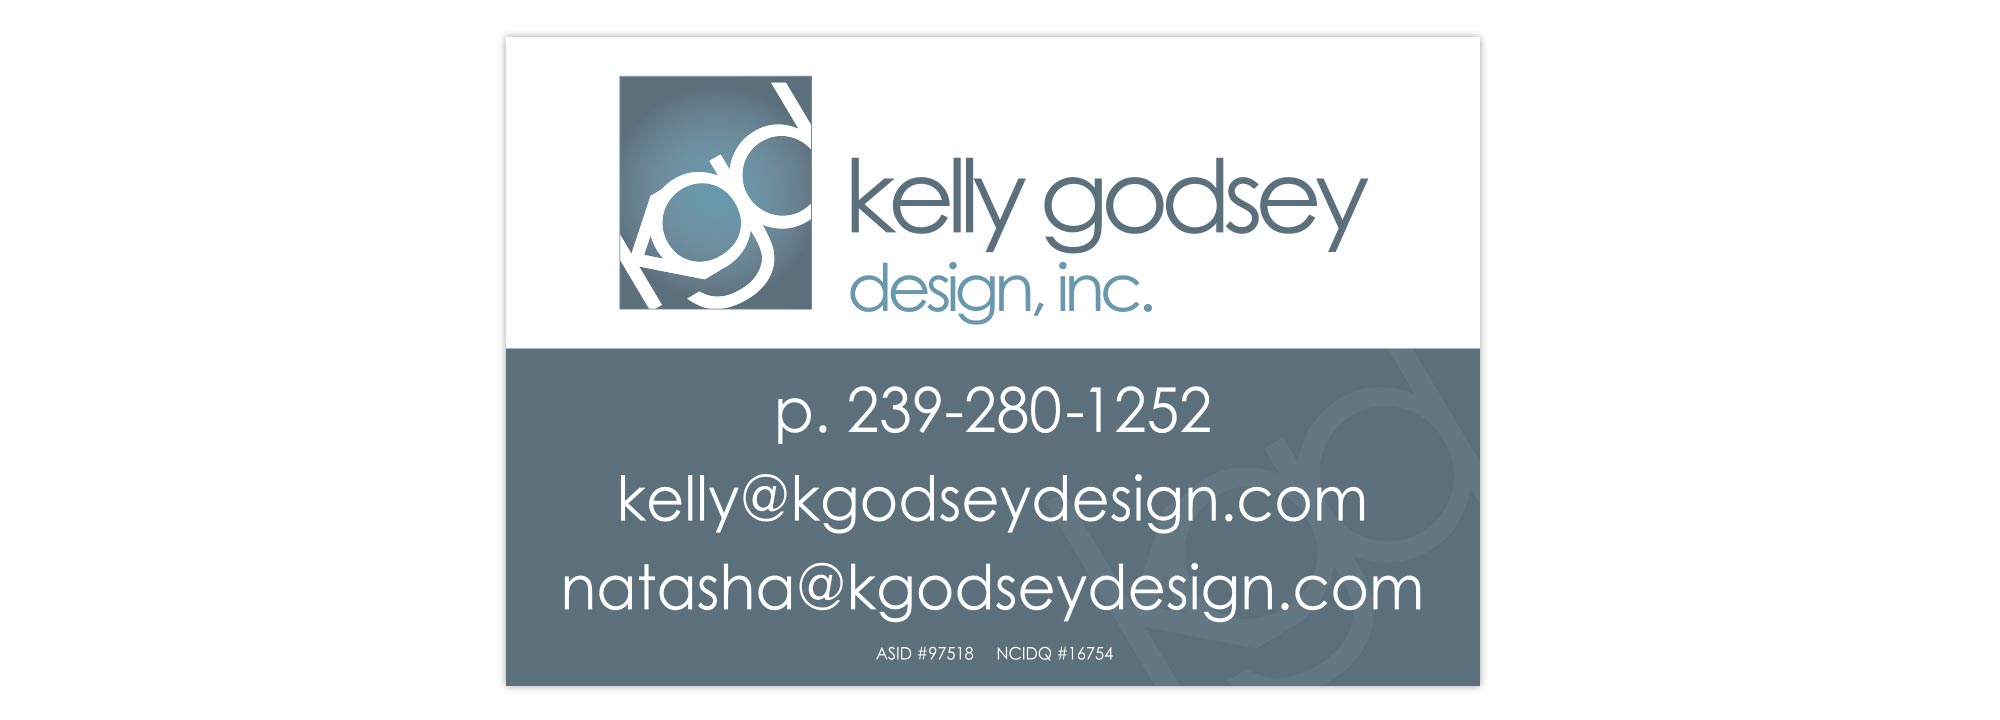 Kelly Godsey Design Business Card